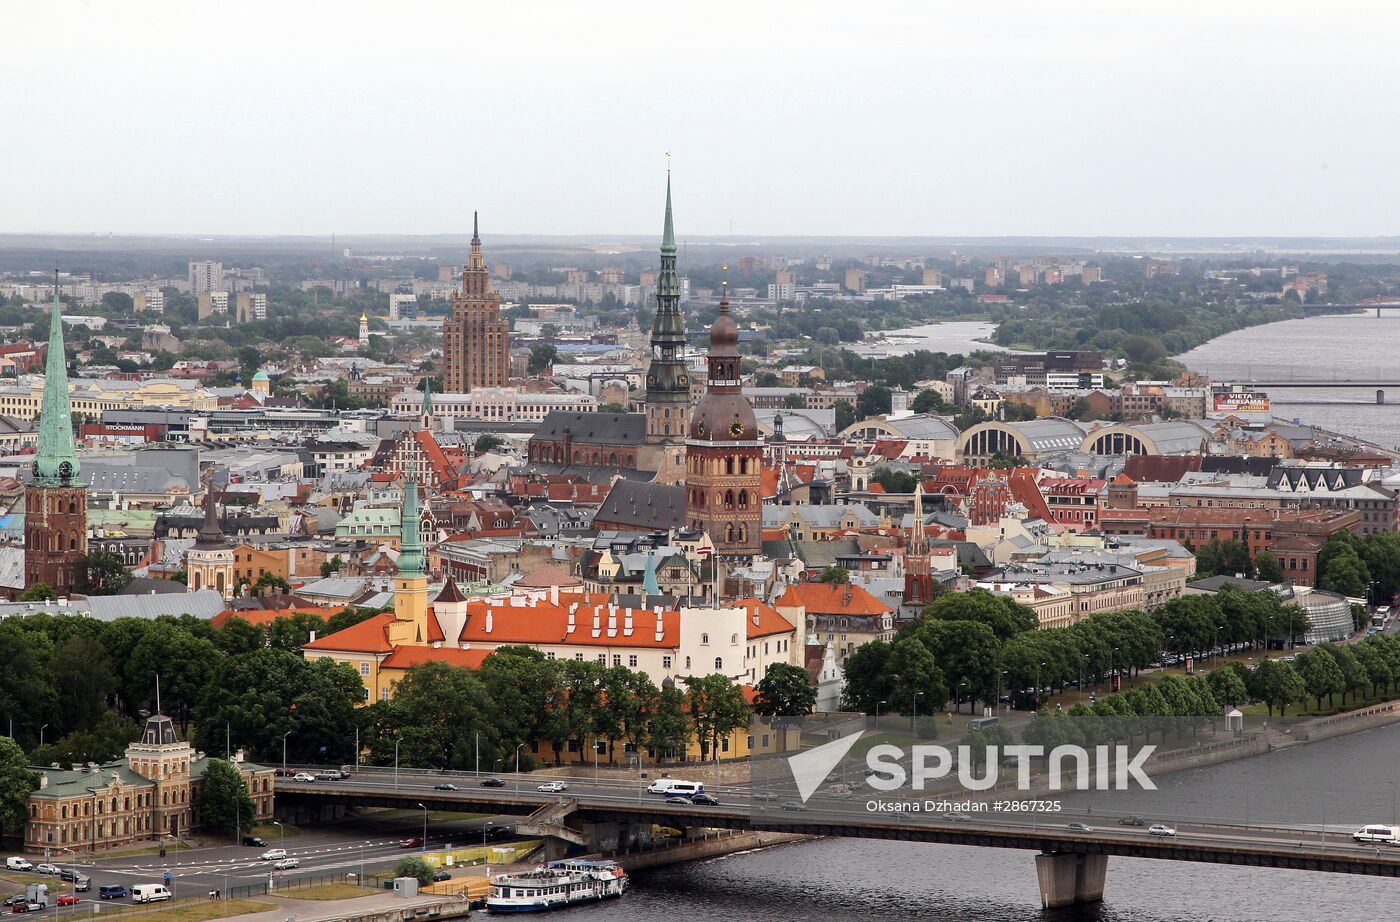 Cities of the world. Riga